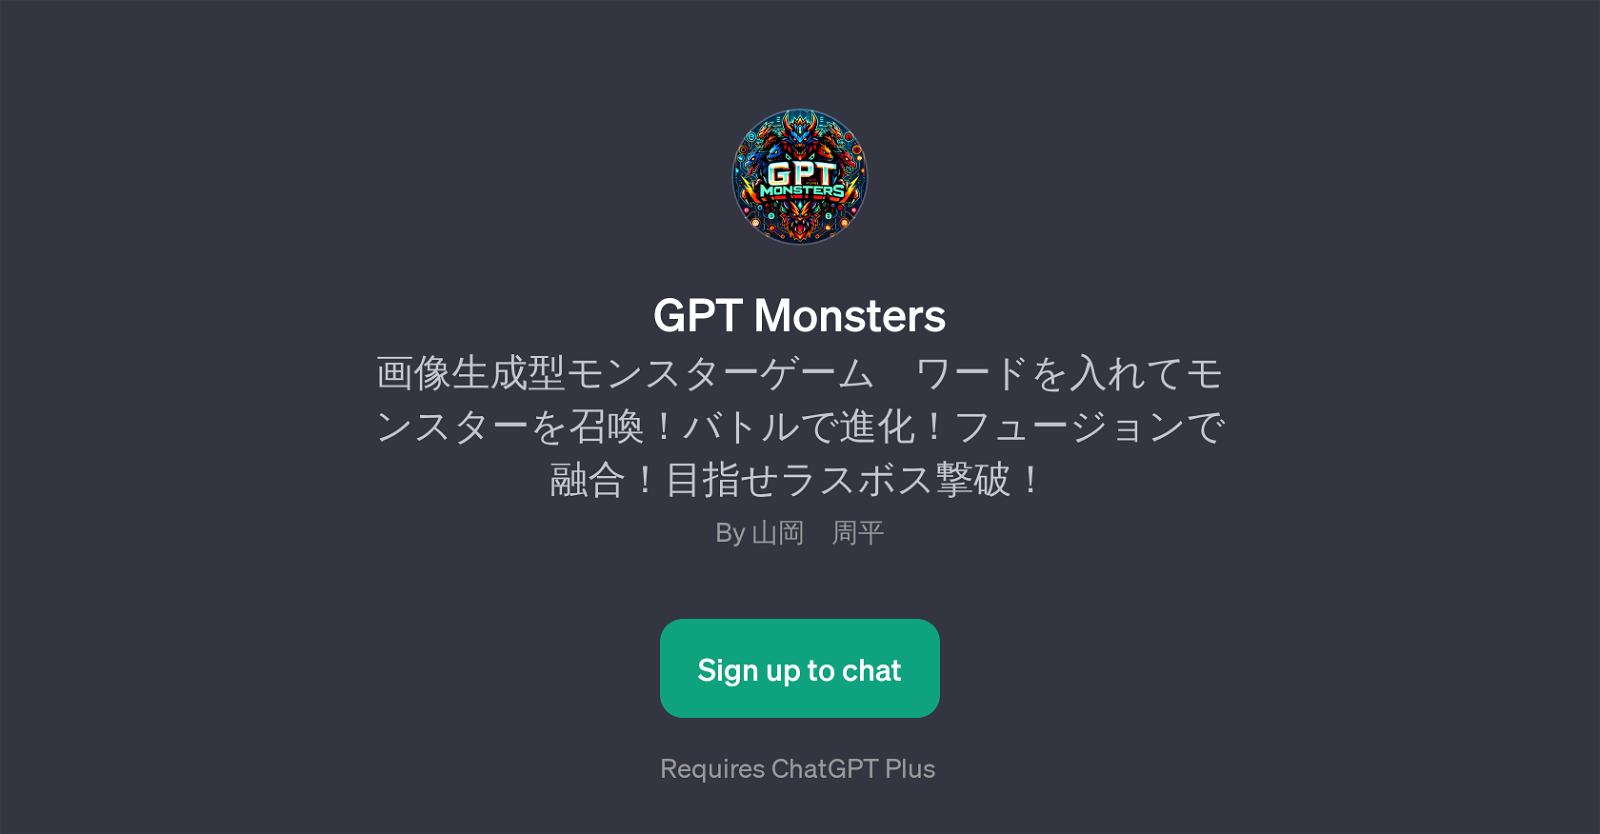 GPT Monsters website